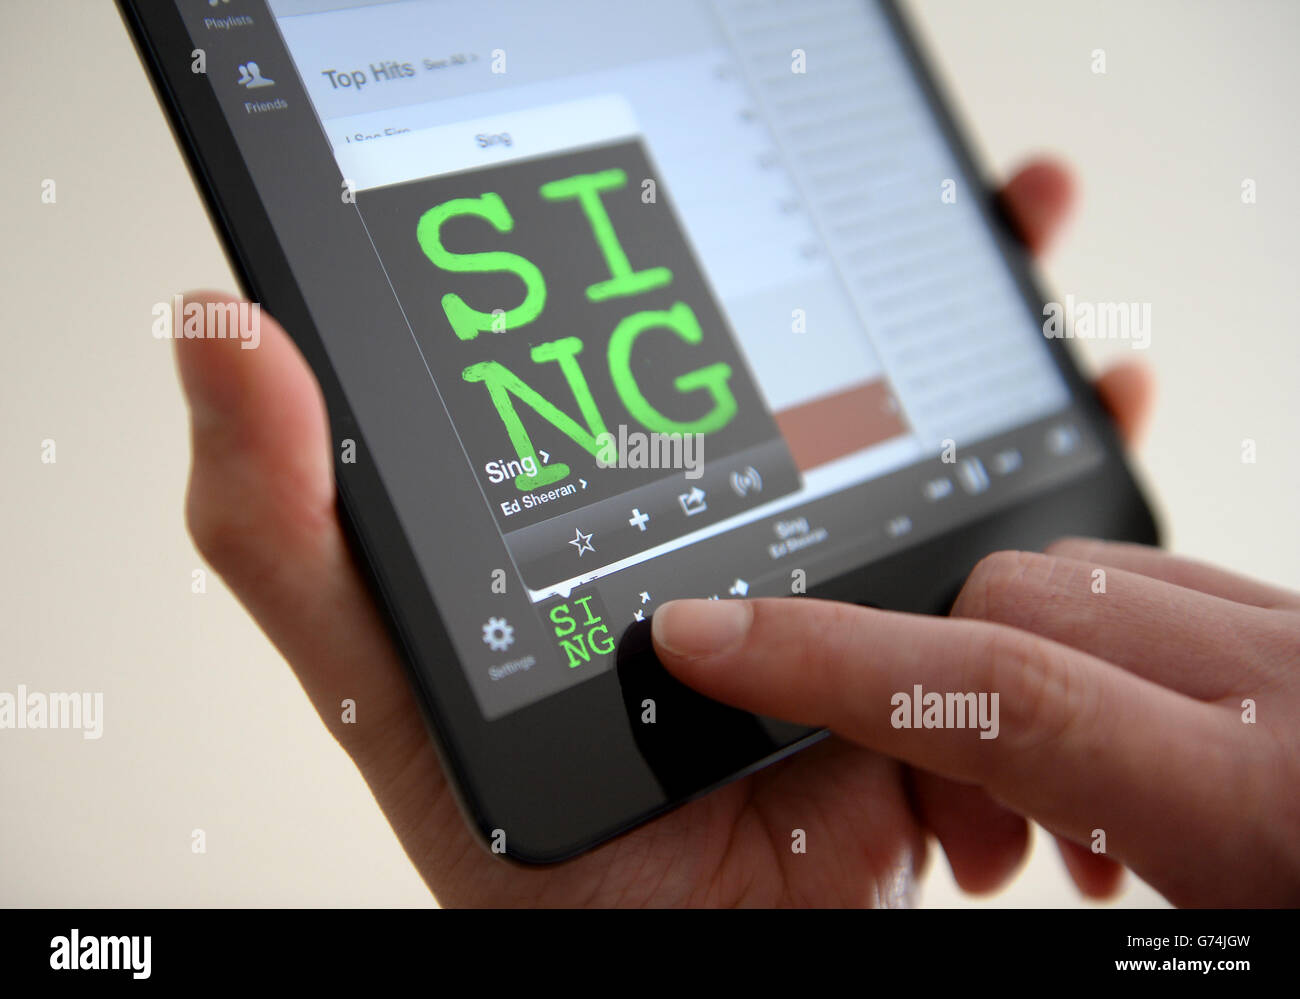 The Spotify is used on an Apple iPad mini Stock Photo - Alamy